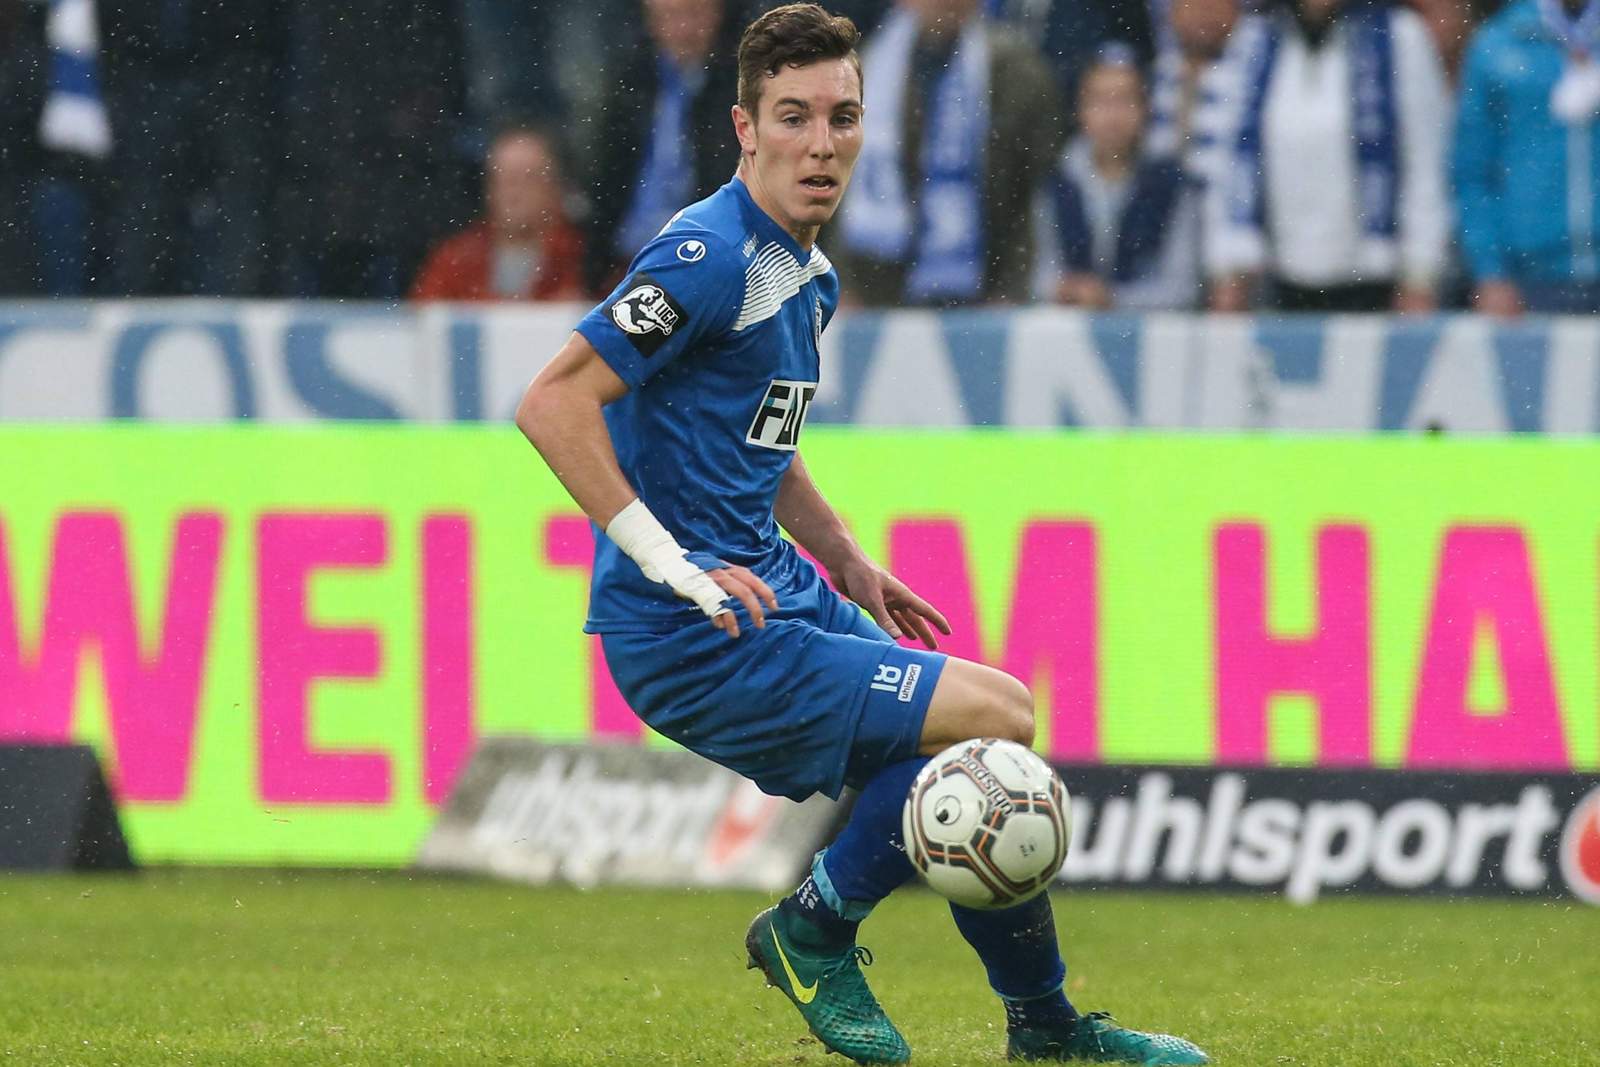 Florian Kath, 1. FC Magdeburg